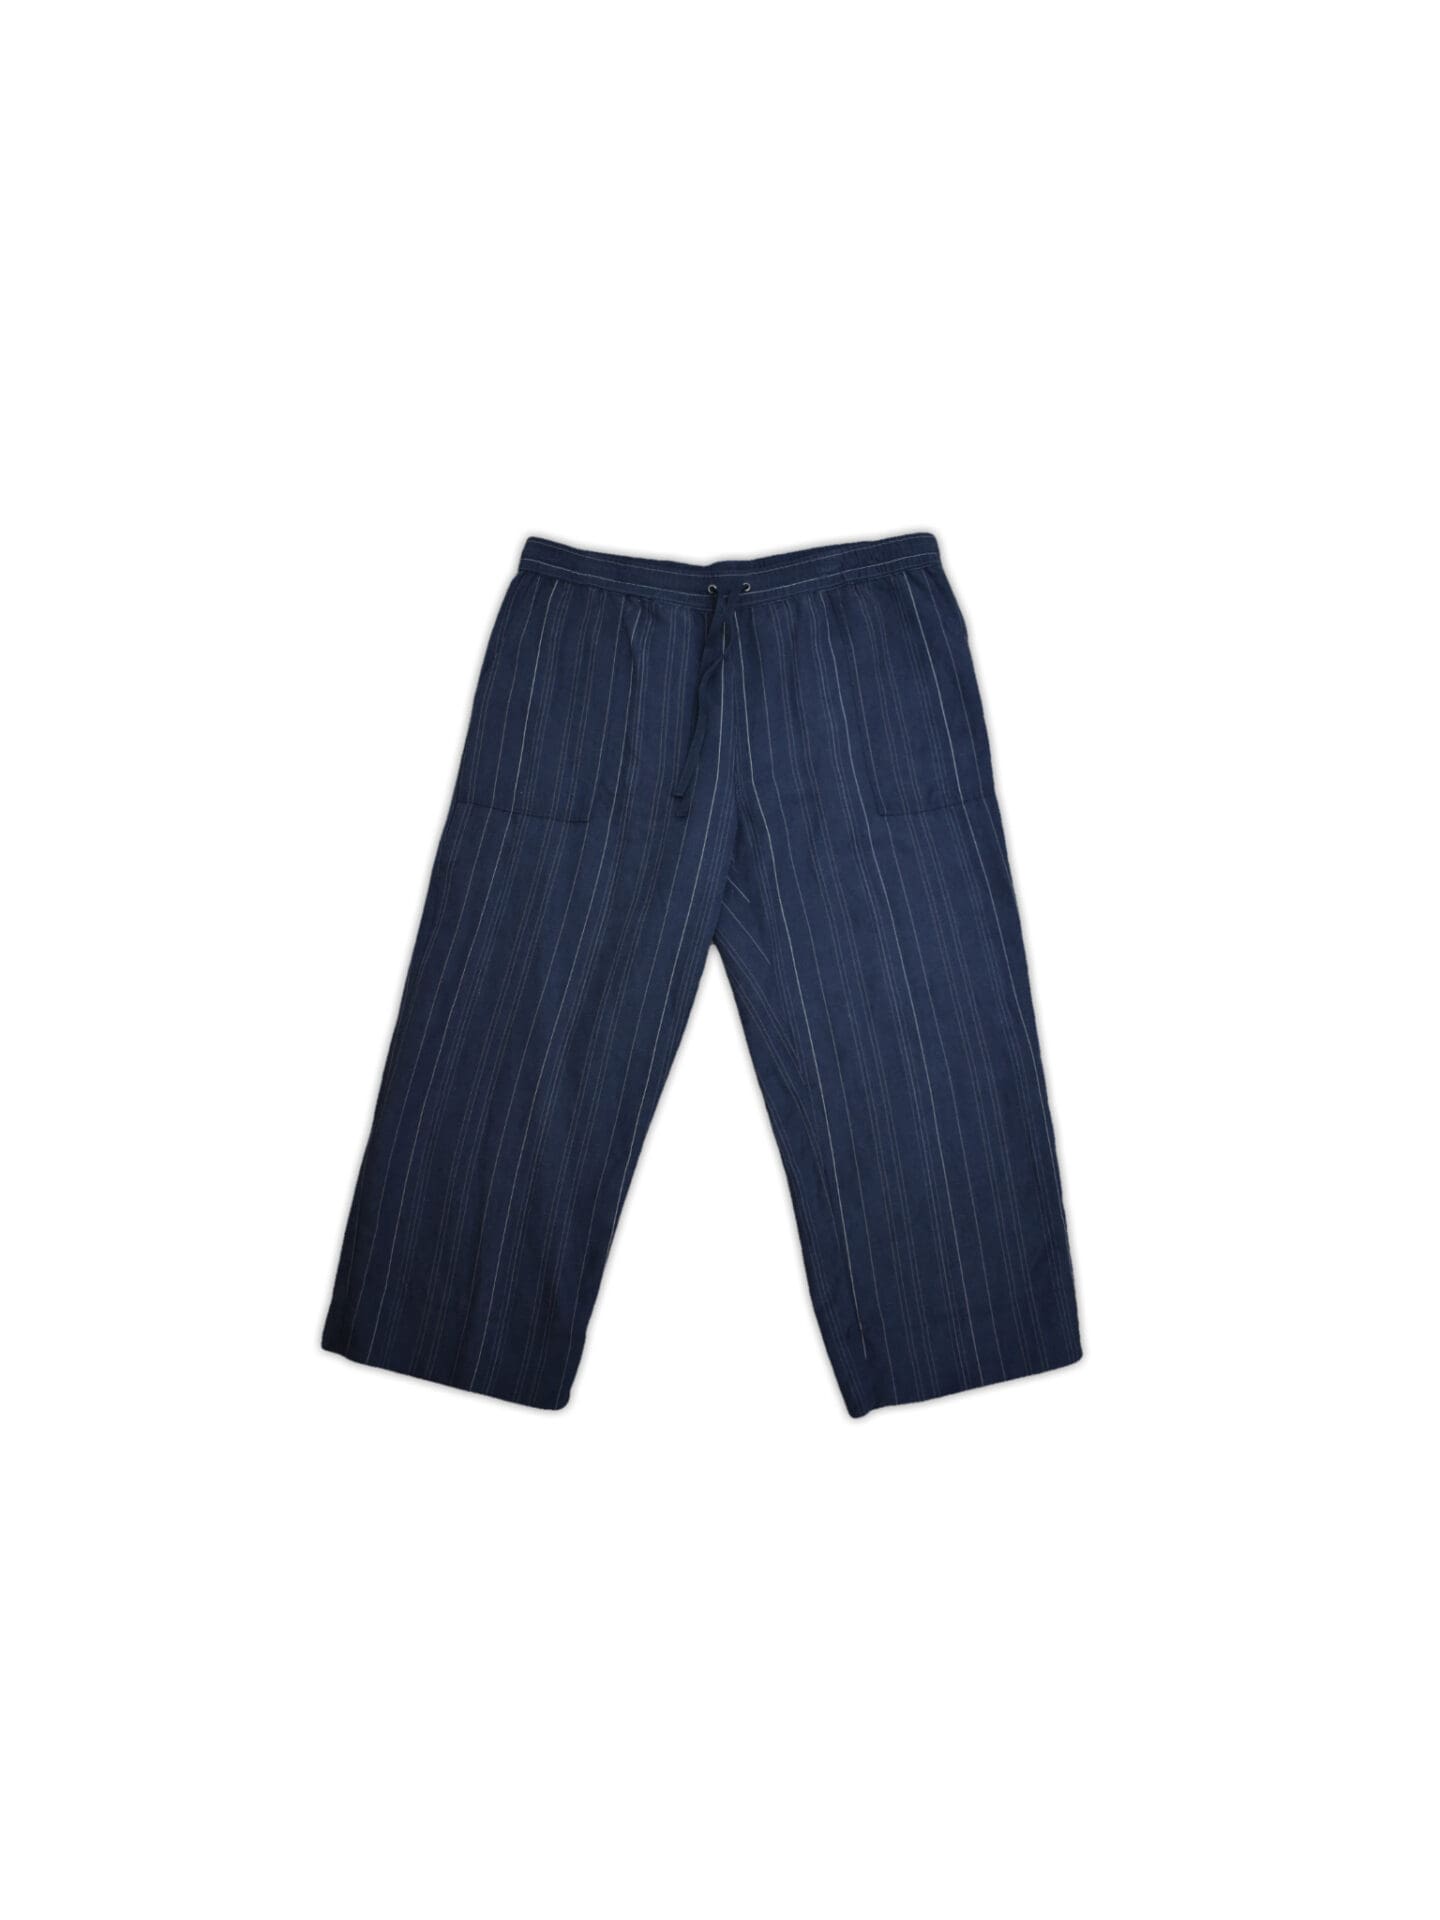 Navy, striped 3/4 pants, medium, Lyocell and linen blend.